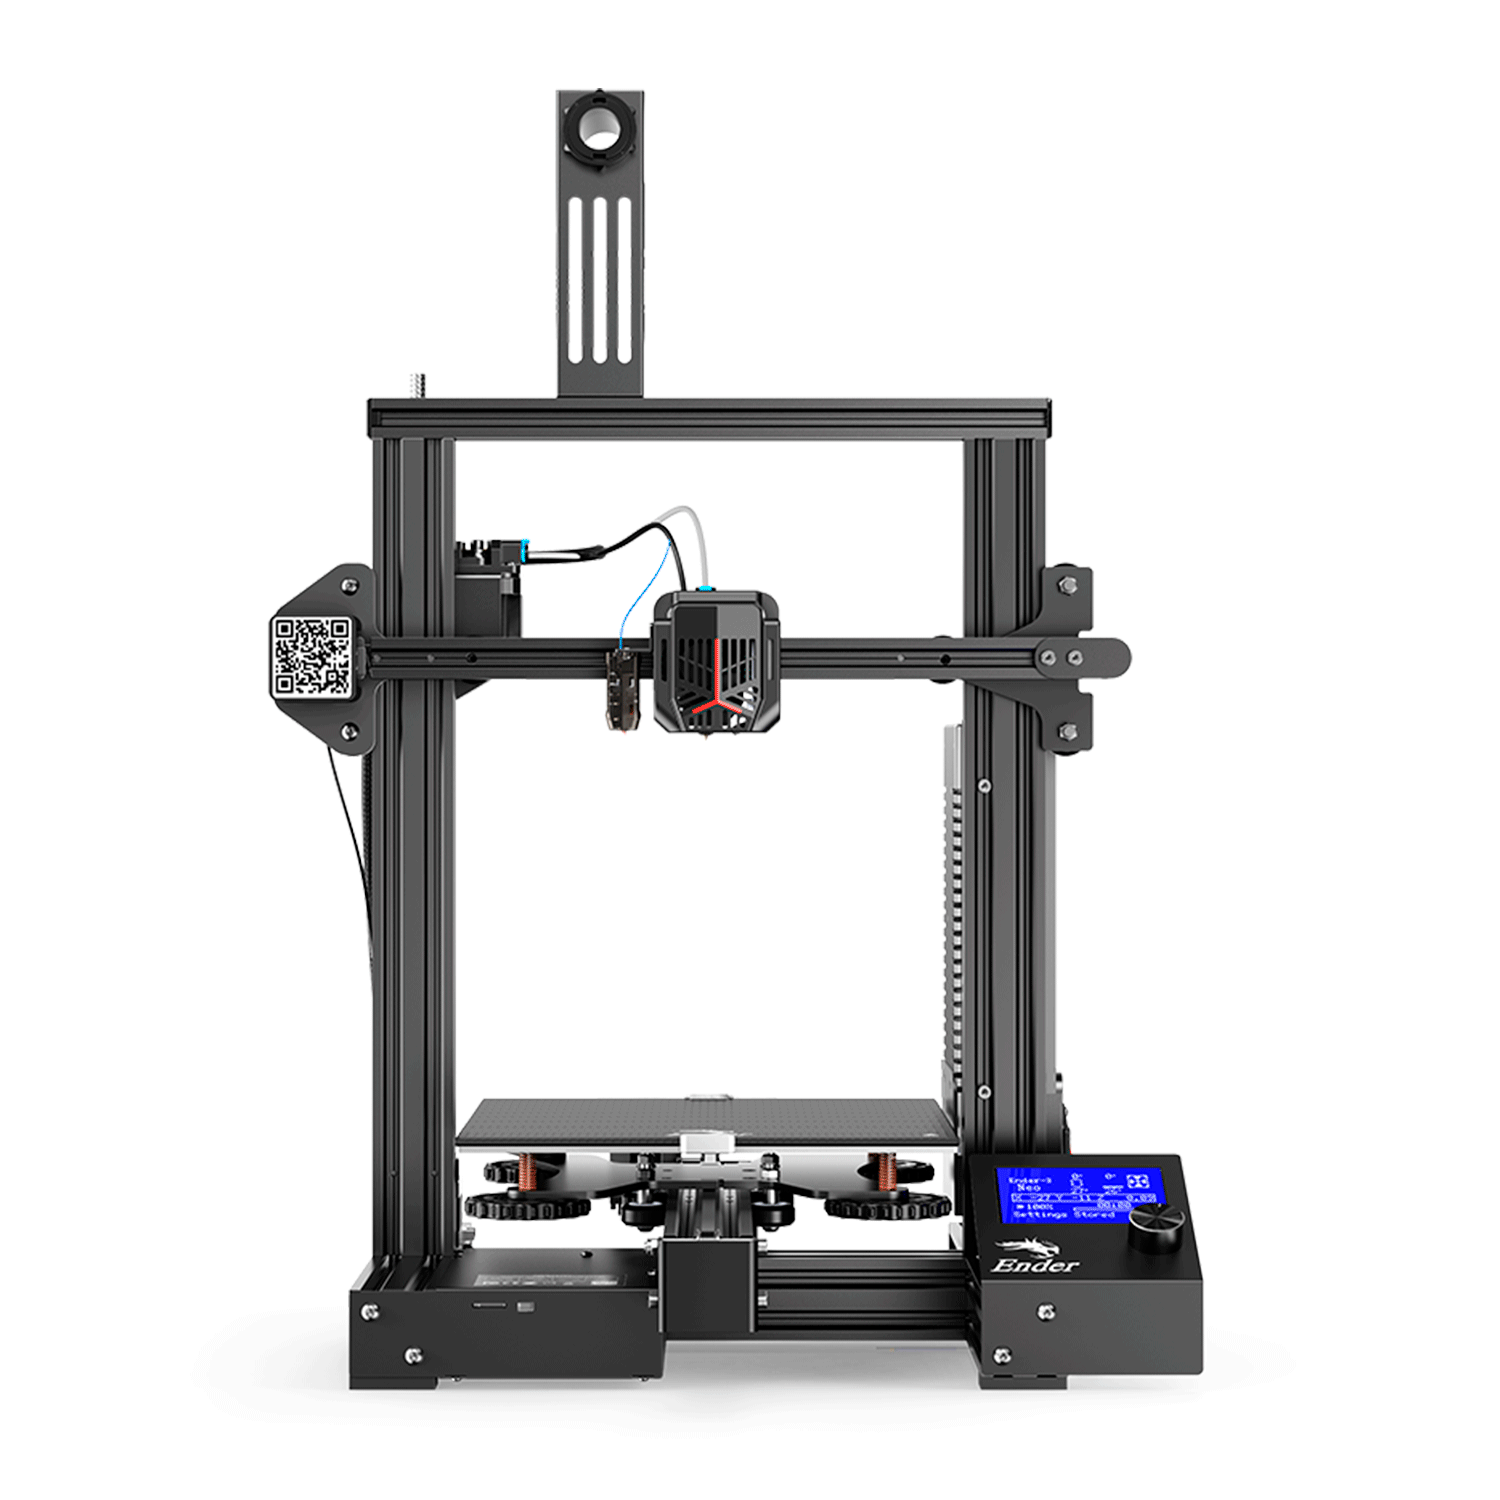 Impressora 3D Creality Ender 3 Neo (220*220*250MM)